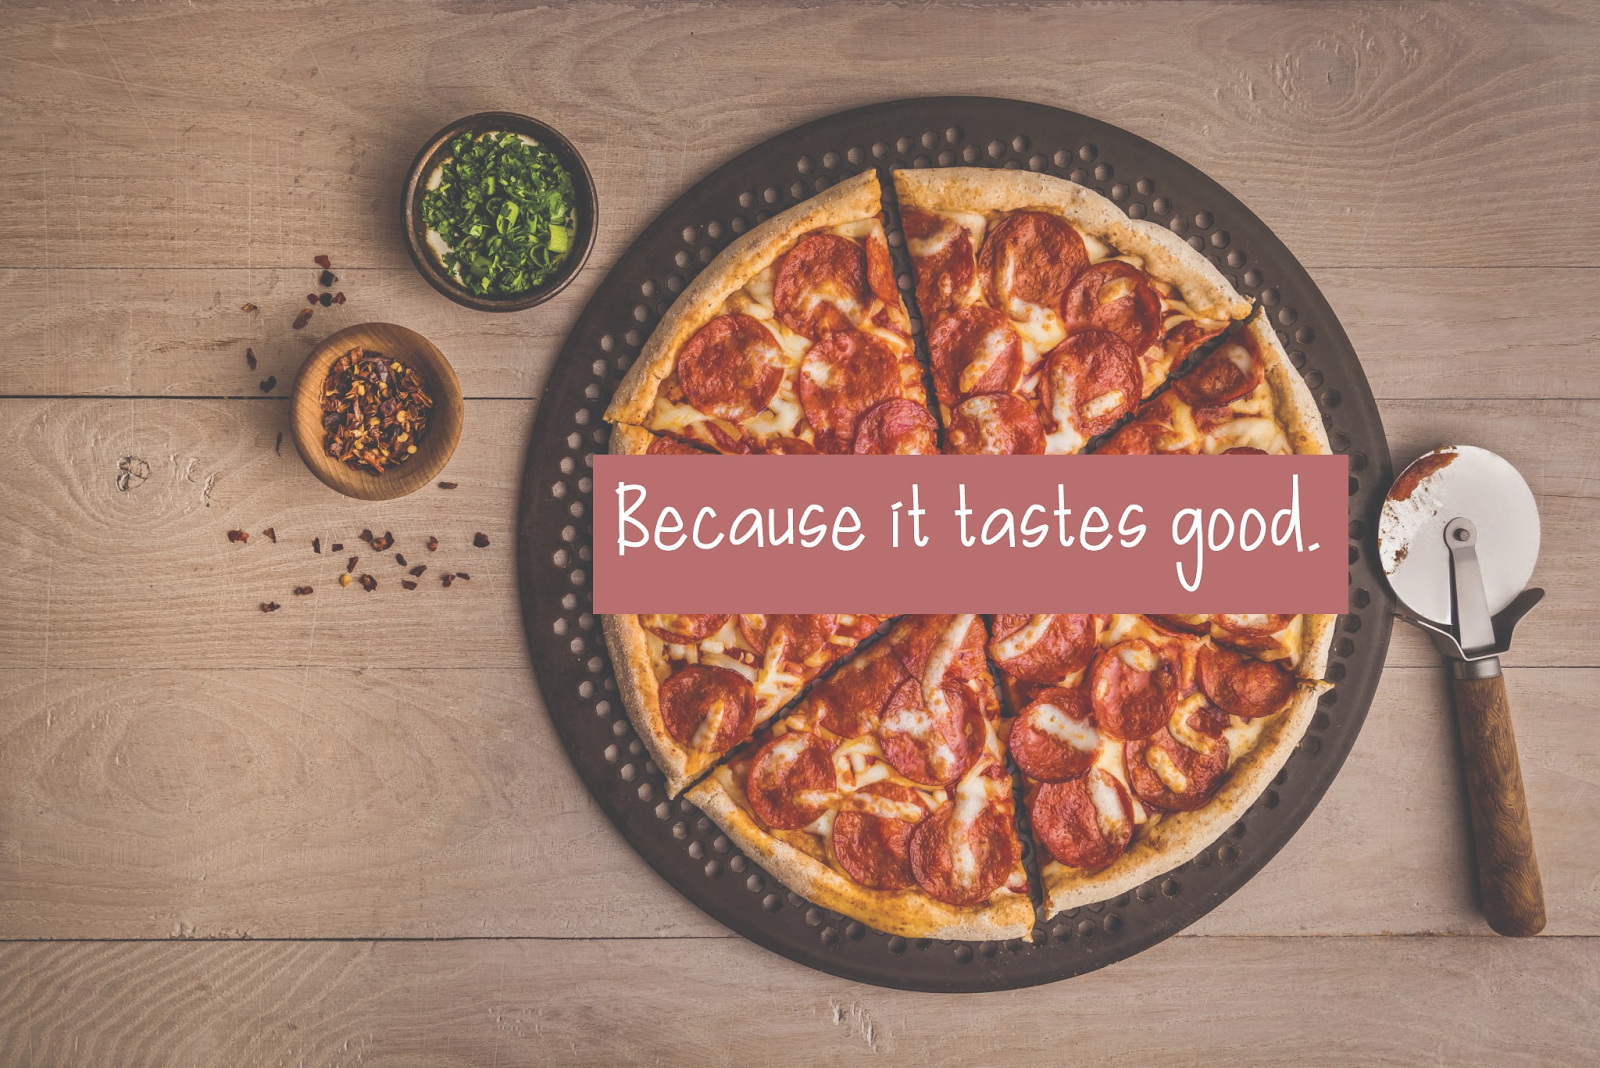 Pizza, ingredients, phrase - "because it tastes good"